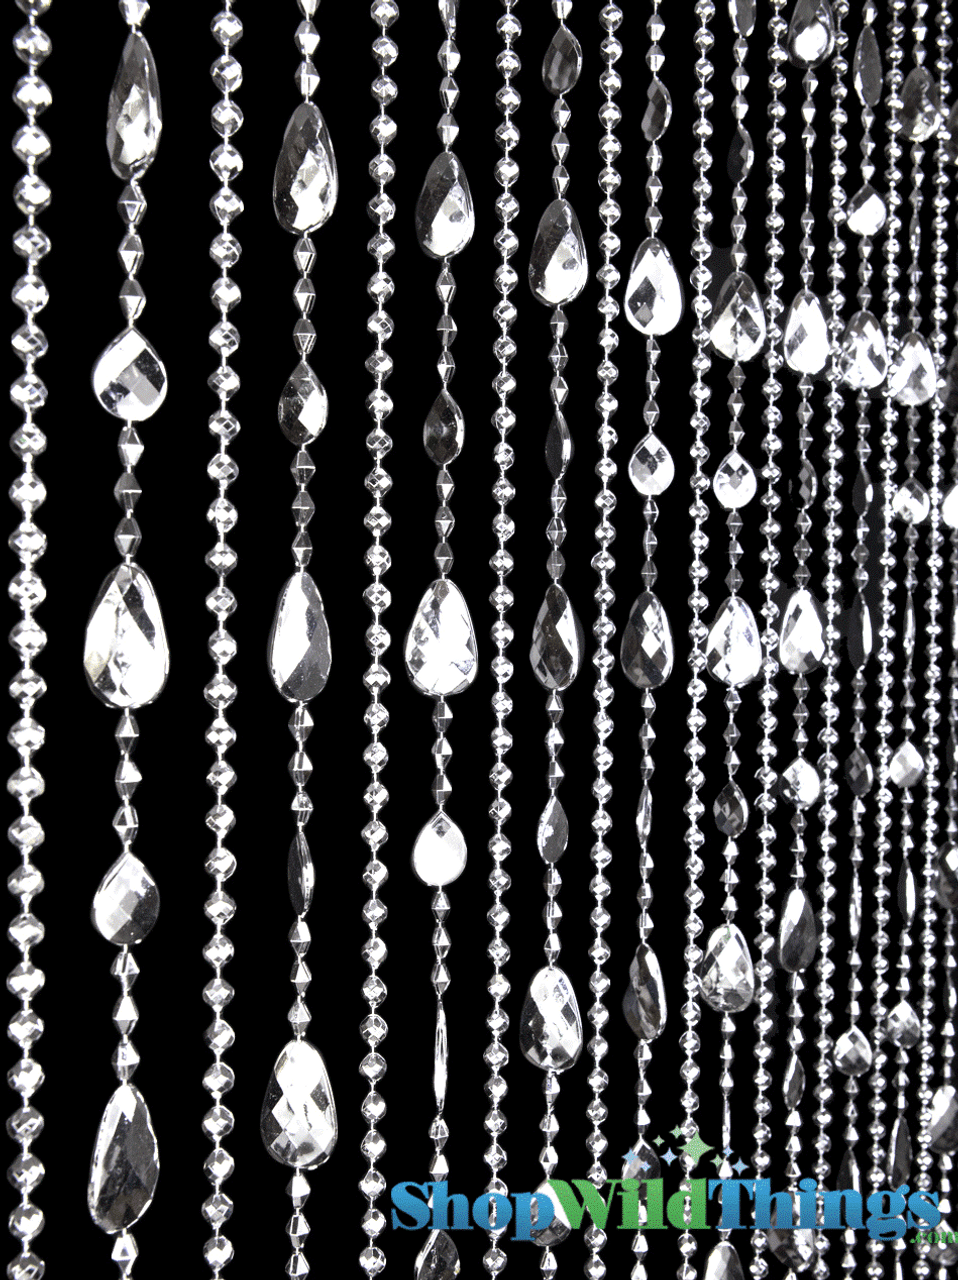 White Teardrop Pearls String Beads Garland Sewing Trim Craft Wedding Crafts